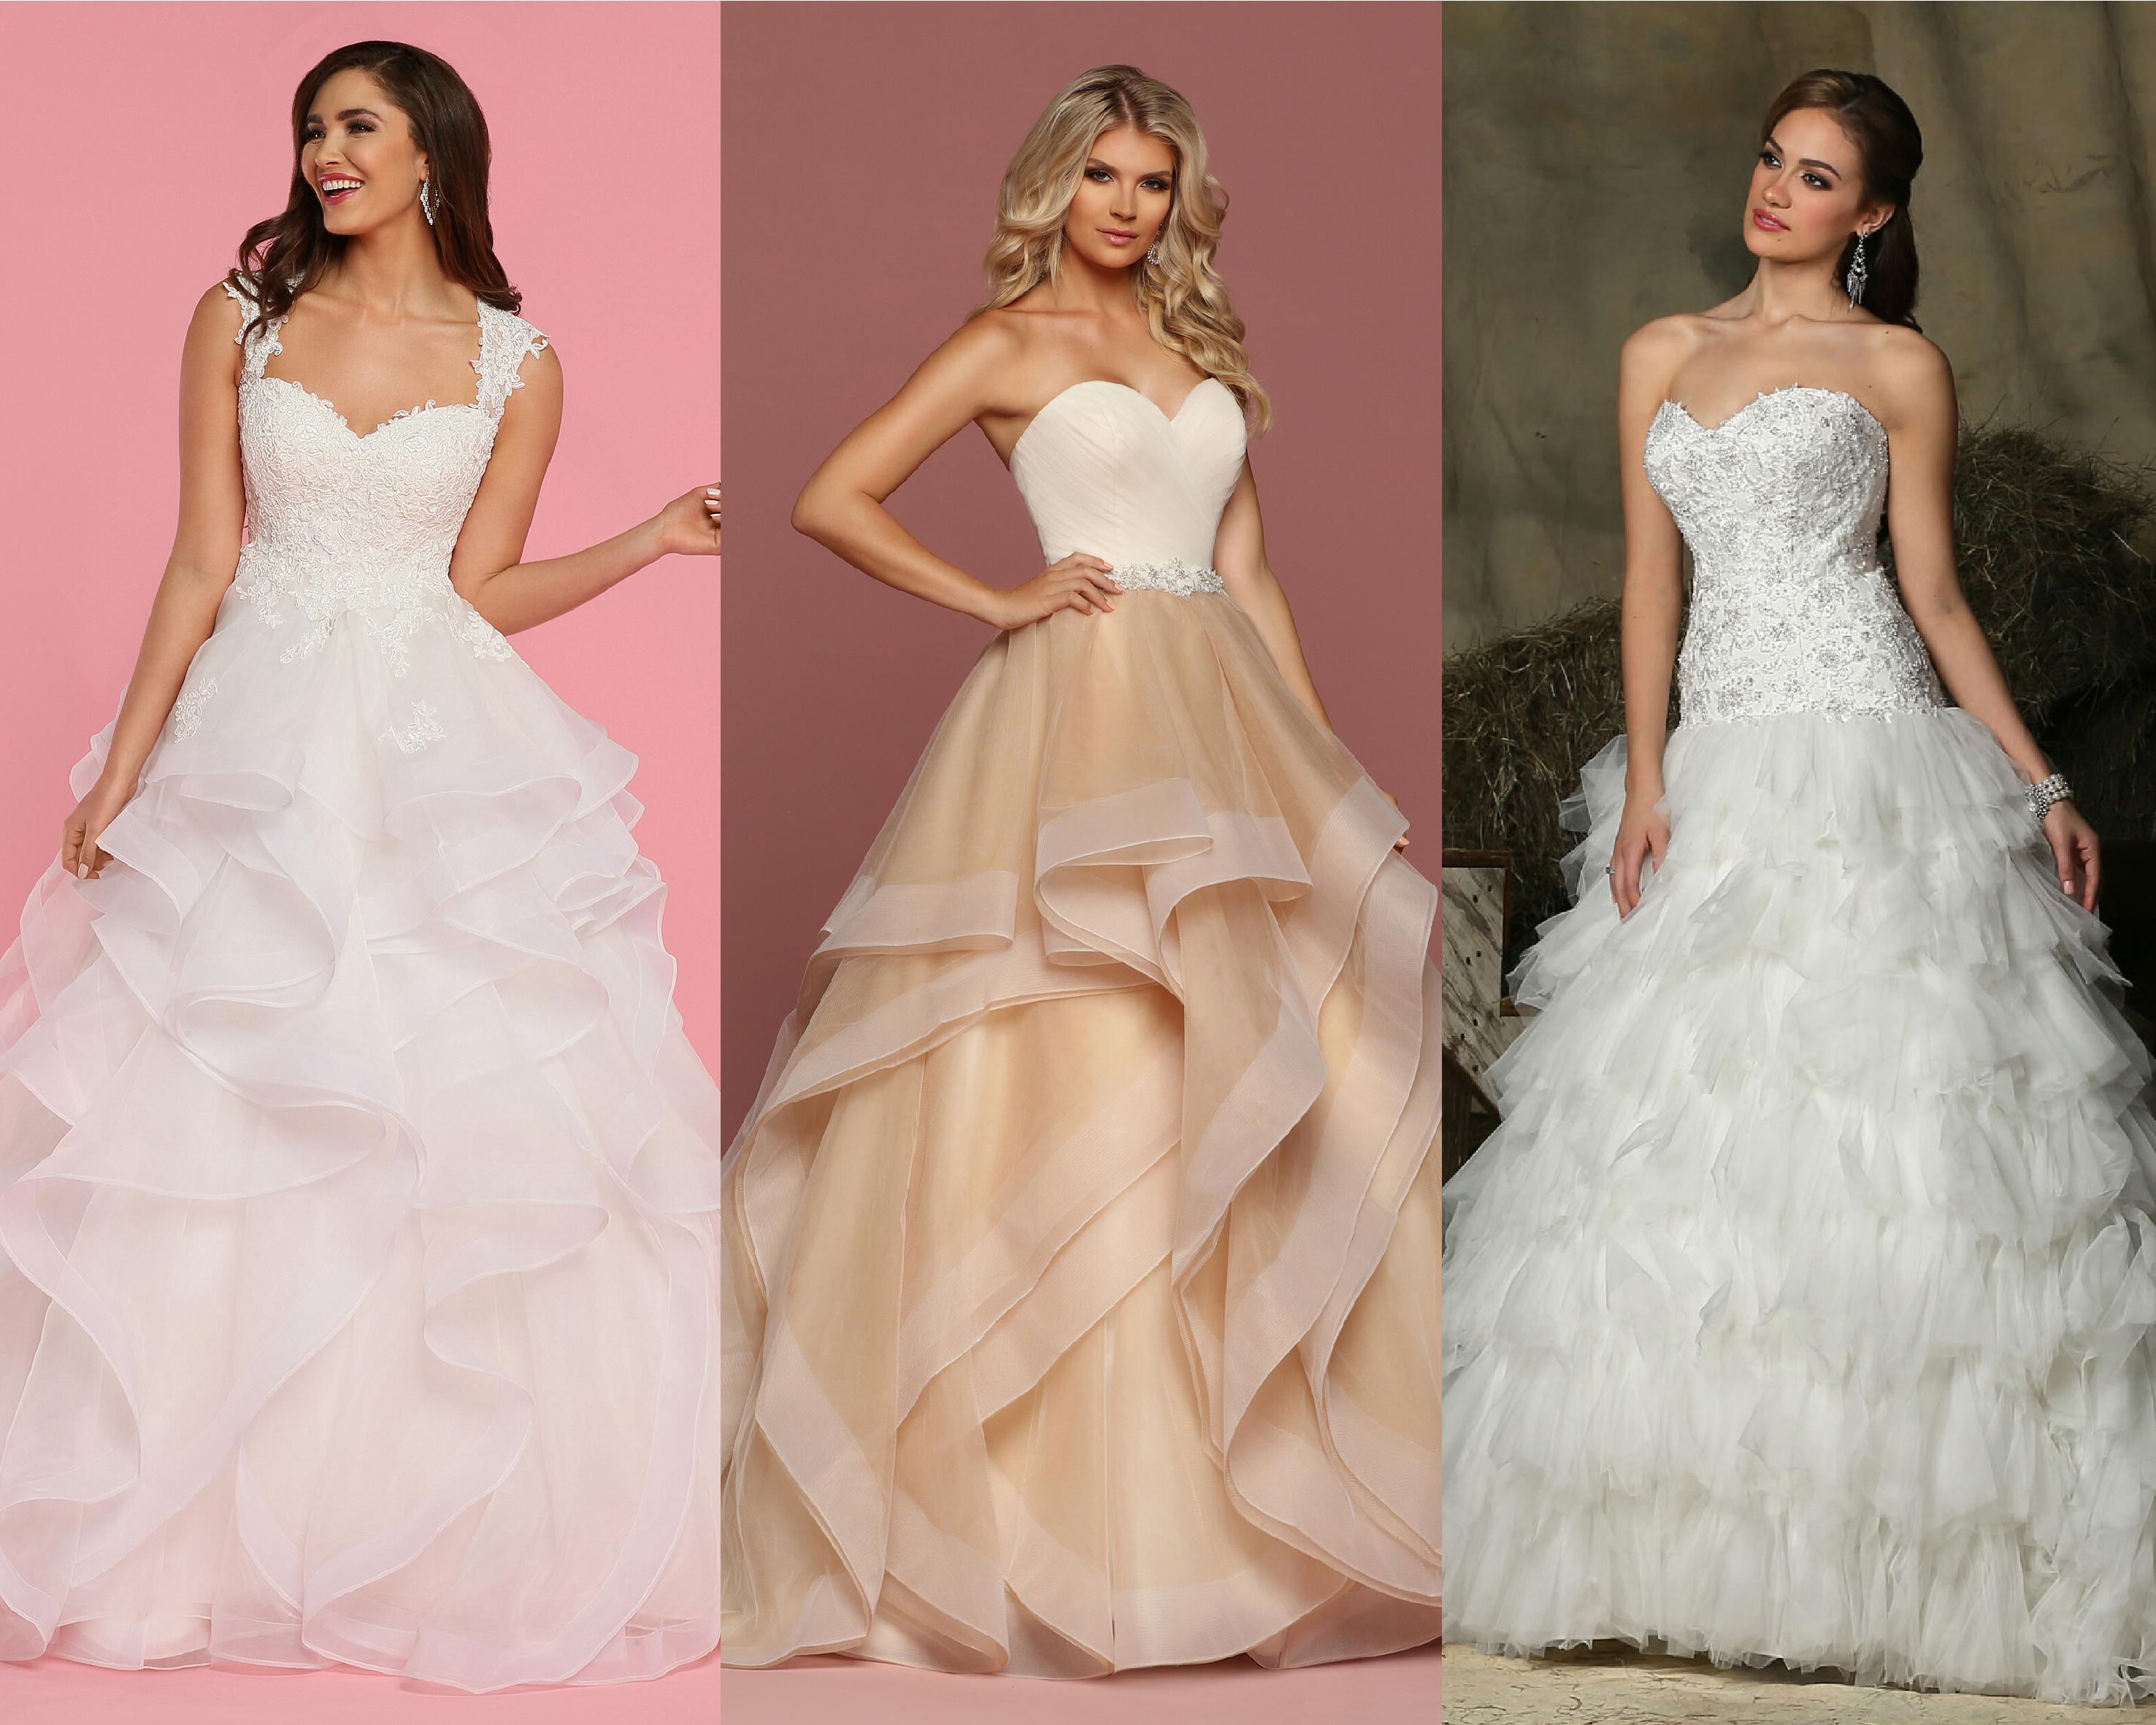 Top Classic Wedding Dress Trends: Ruffled Wedding Dresses